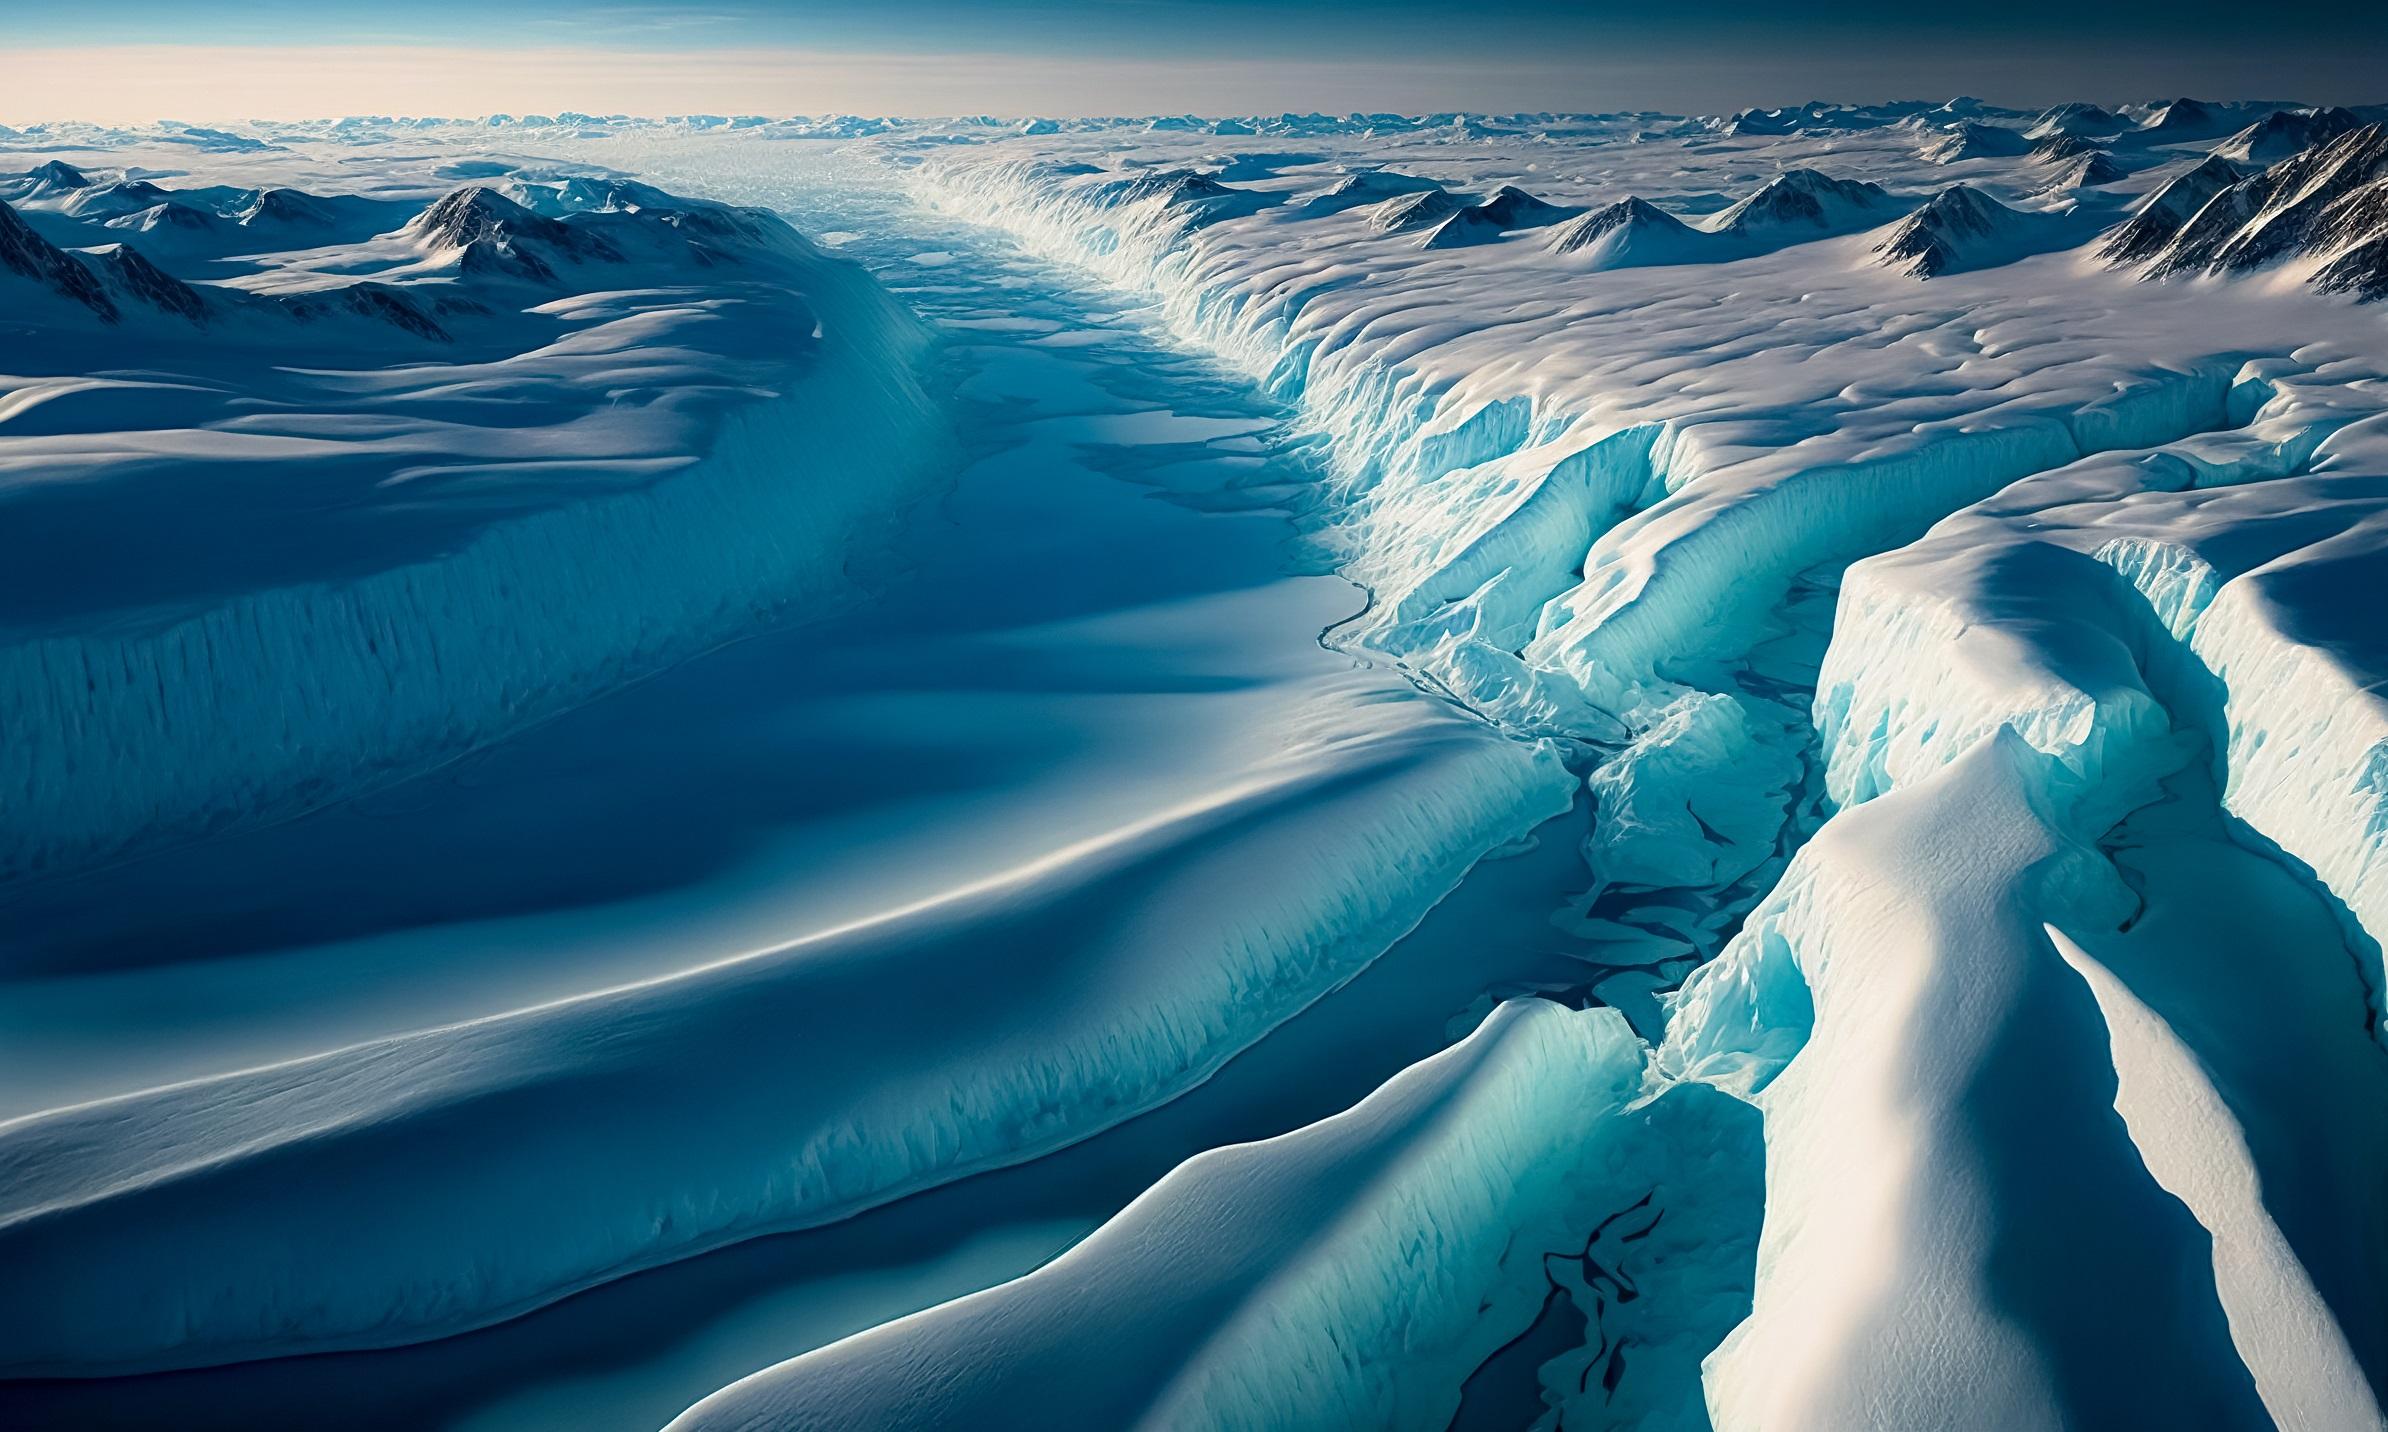 Stock image of frozen landscape